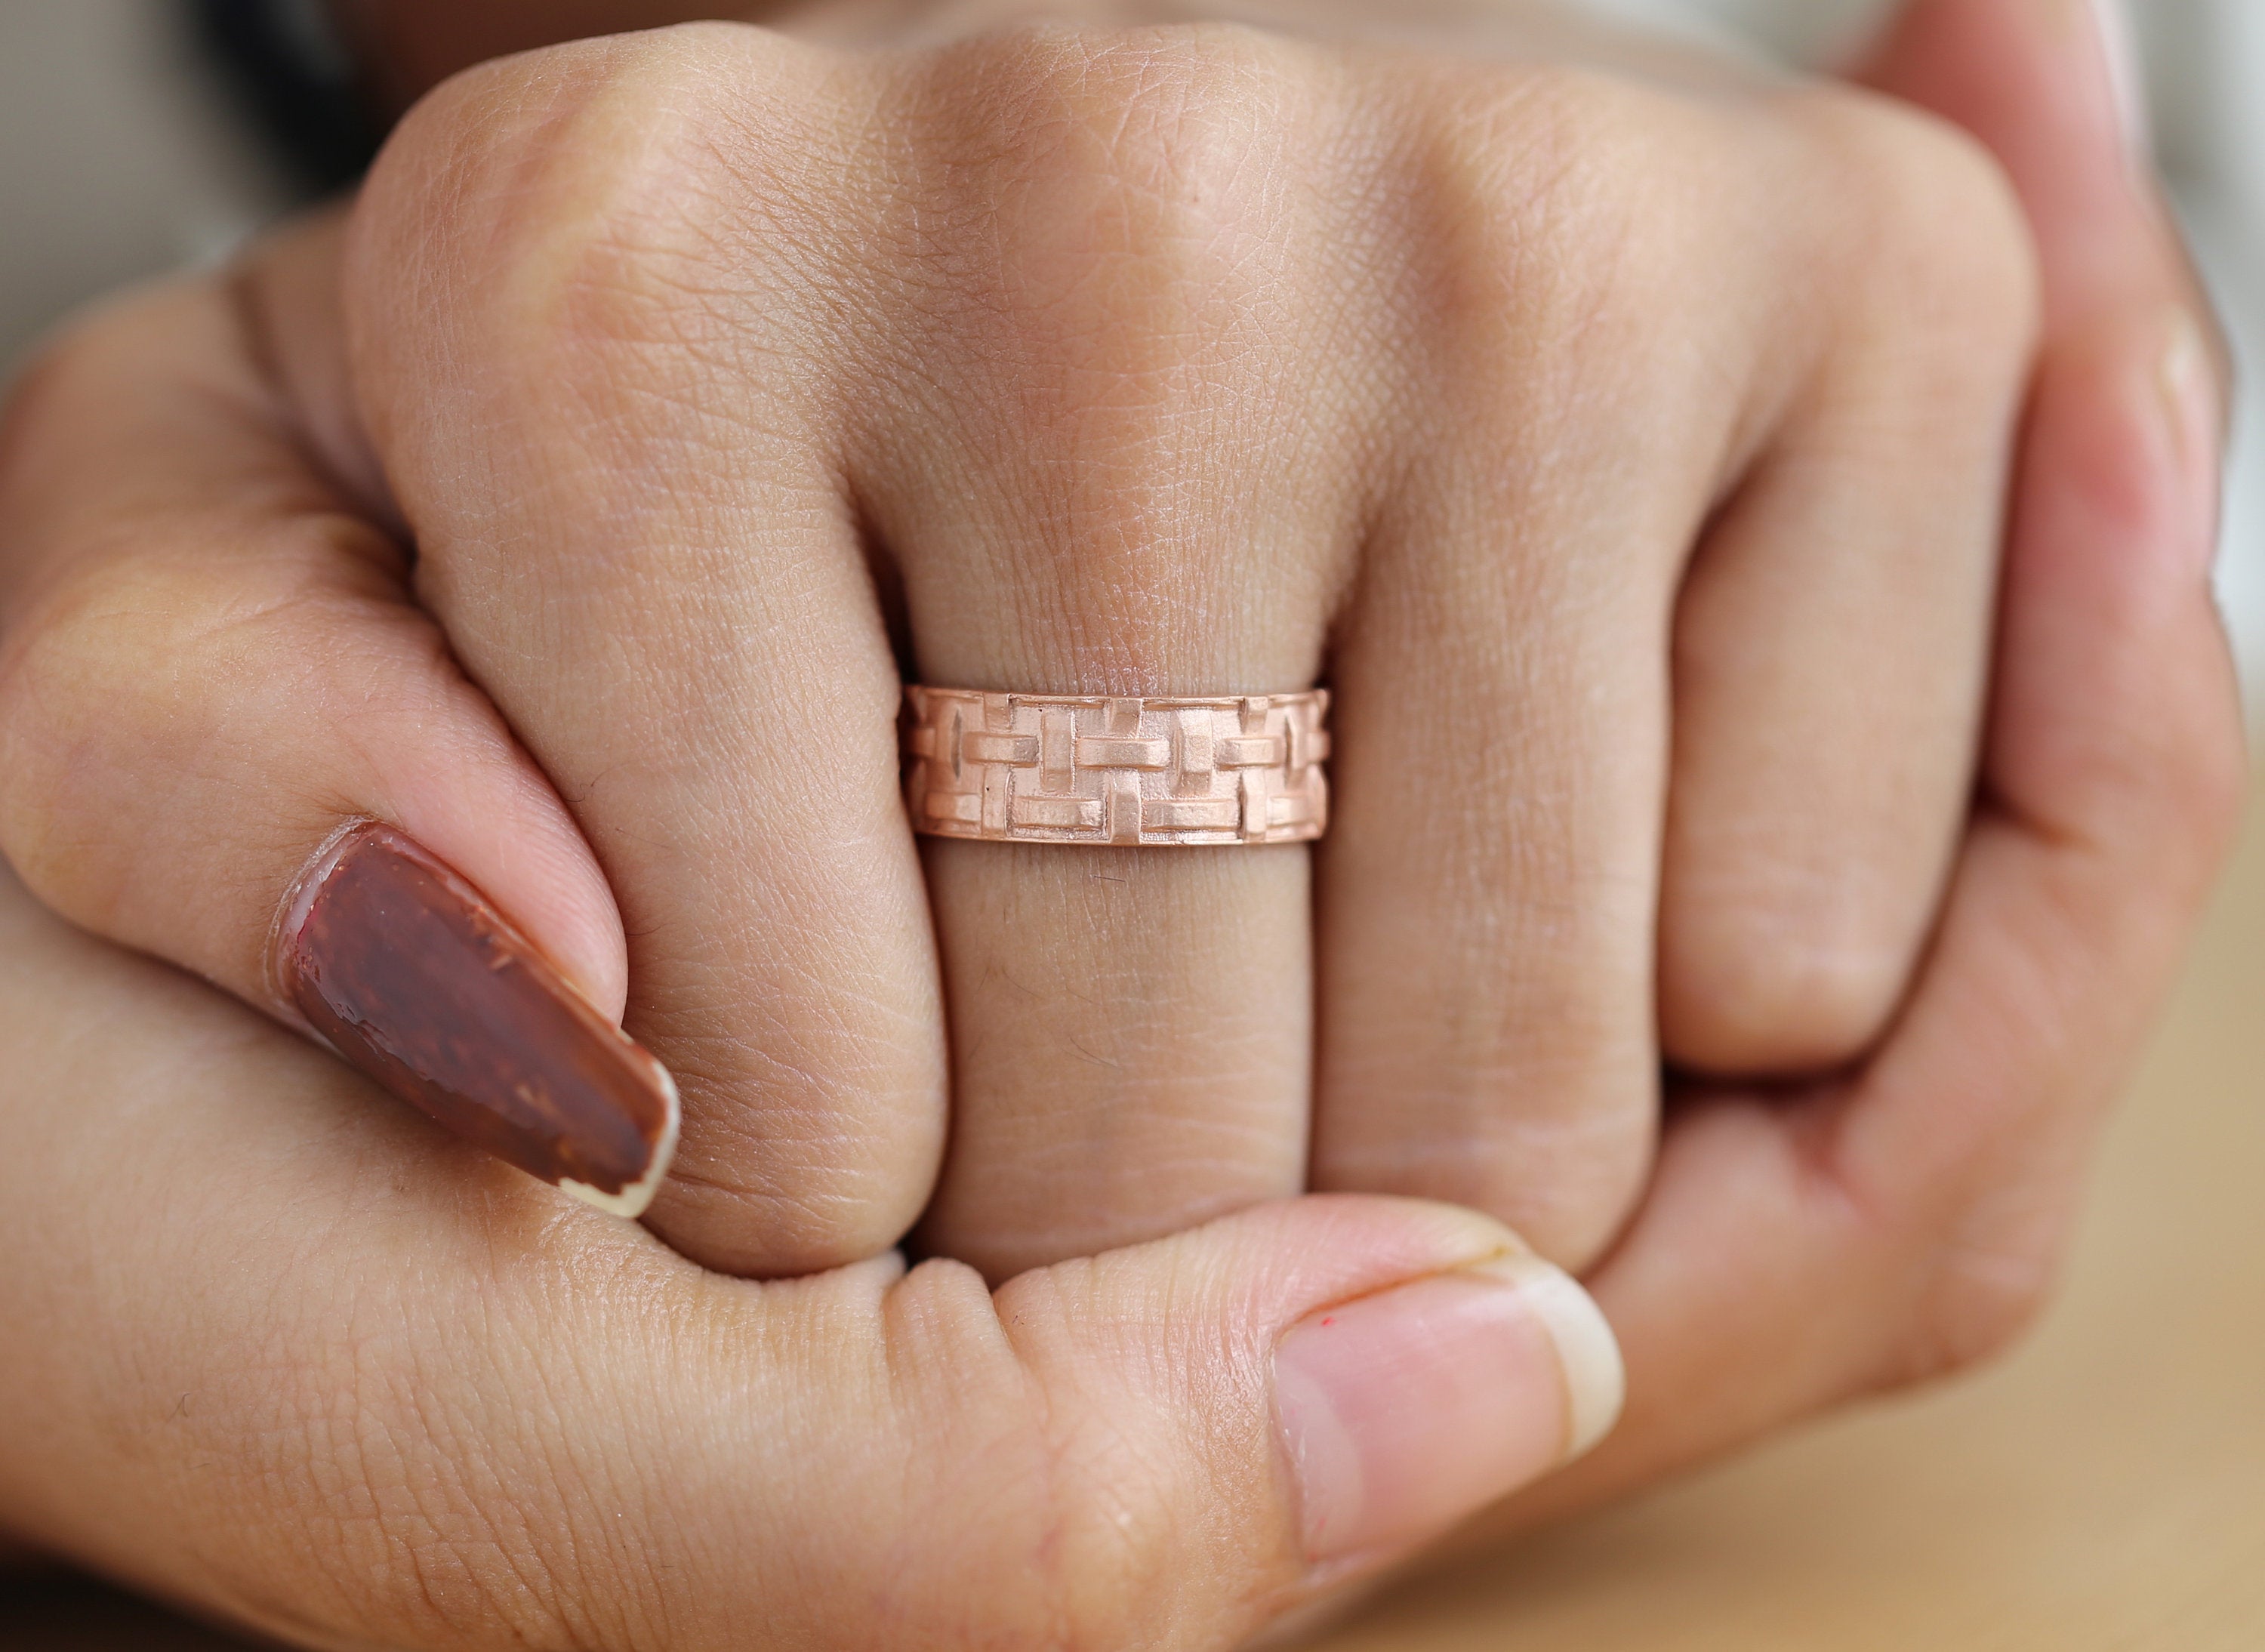 Couple Wedding Band Ring 14K Rose White Yellow Solid Matte Gold Ring Engagement Gift Ring KD782